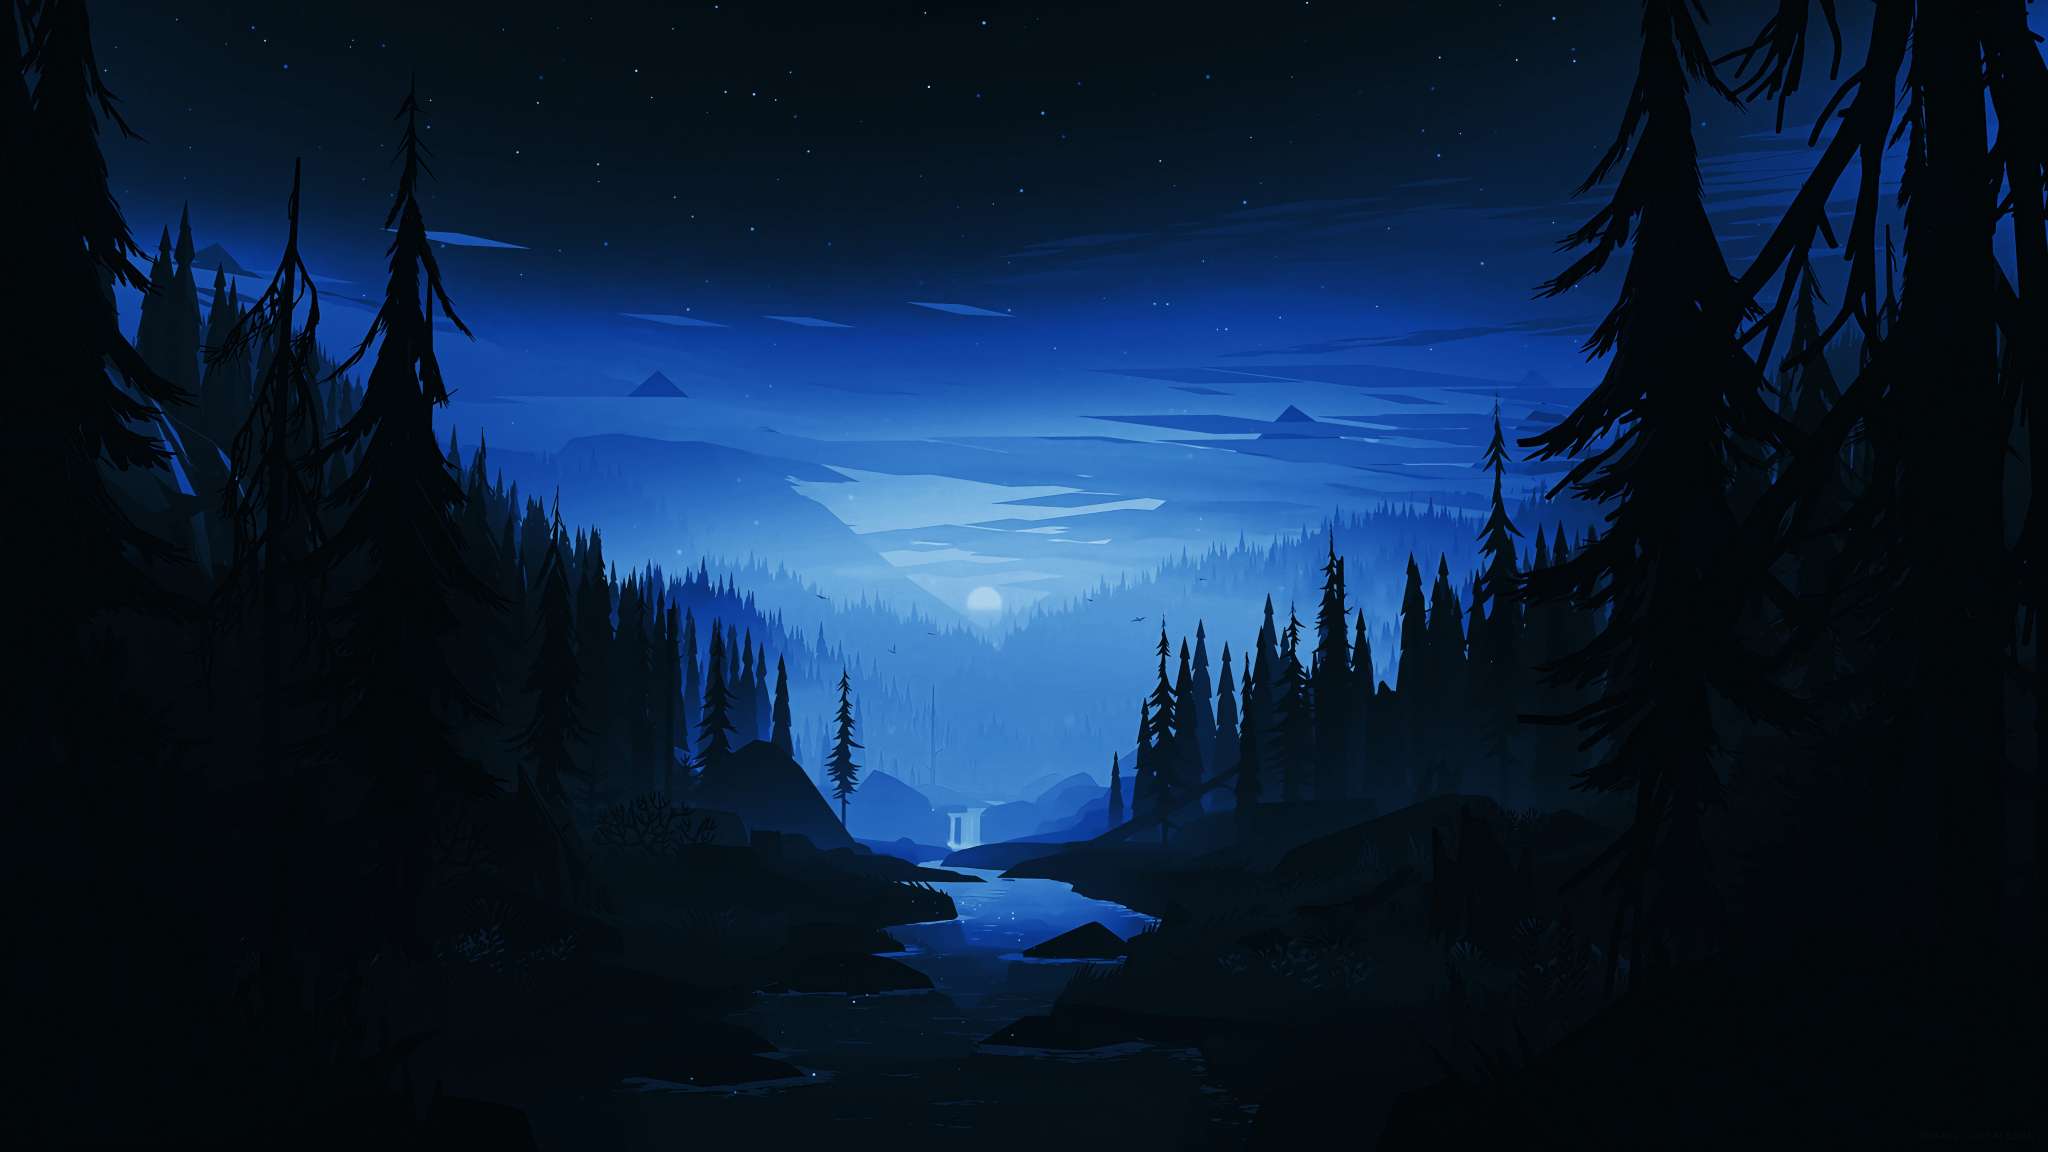 Download wallpaper x dark night river forest minimal art dual wide x hd background